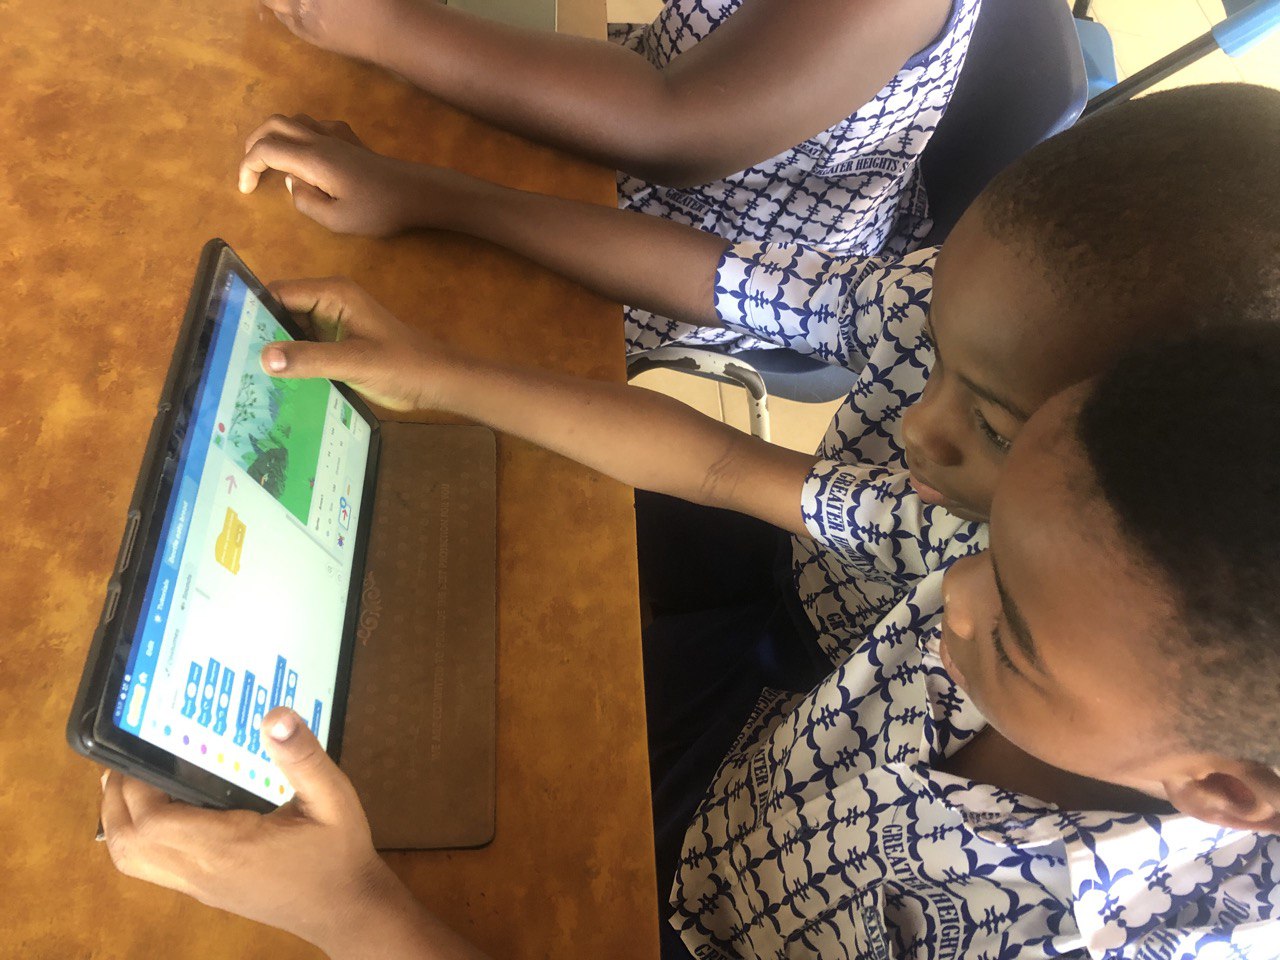 Coding at Greater Heights School - Logic Kids Ghana